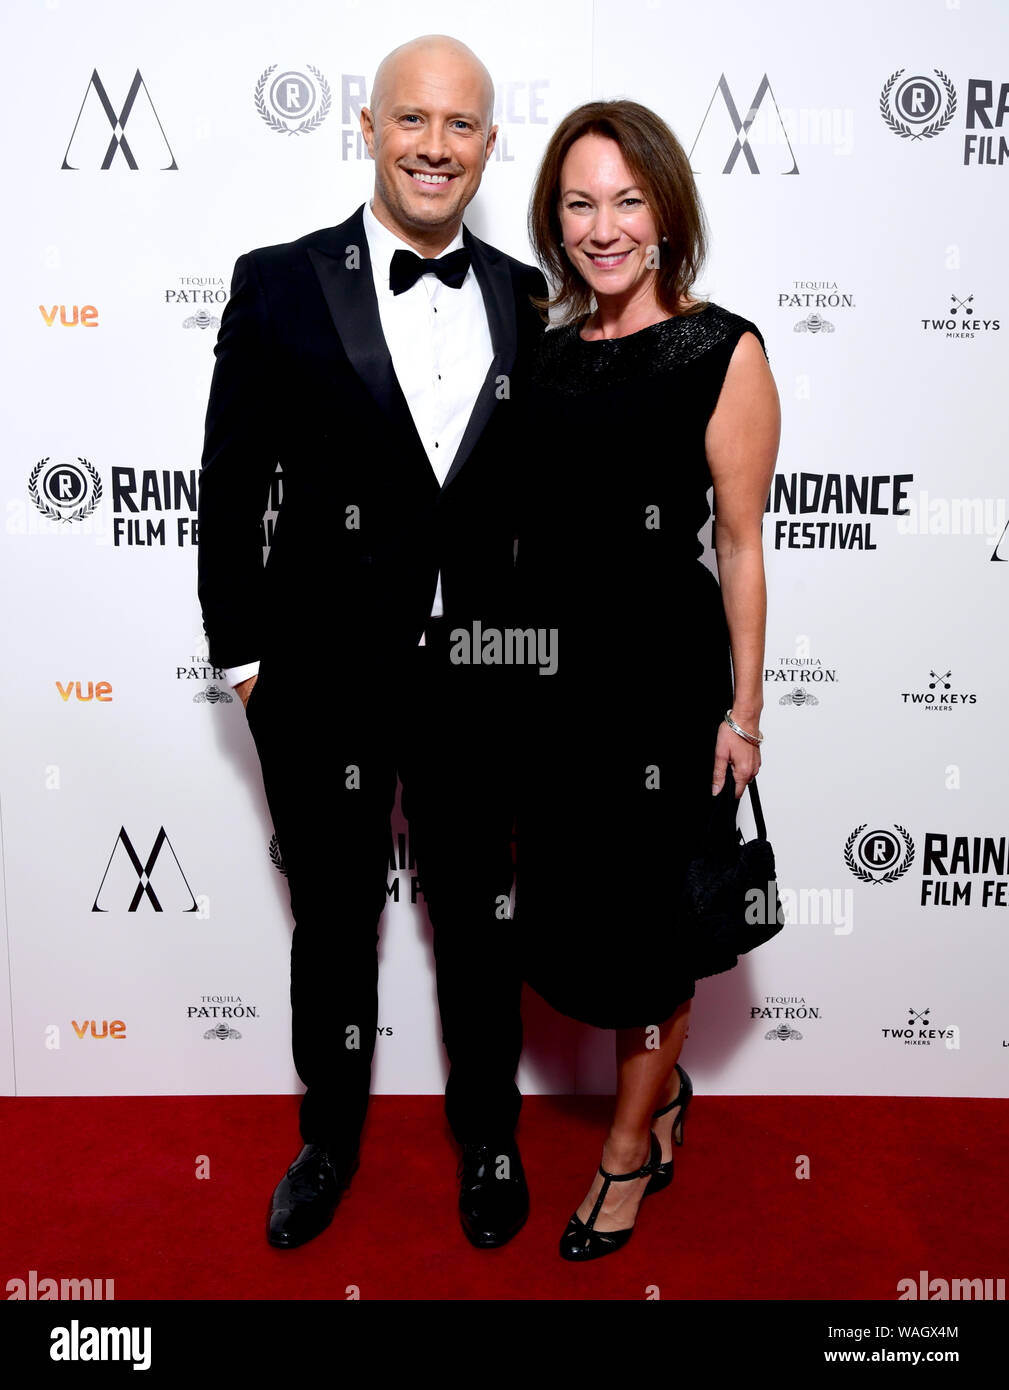 Dale Pinnock and Tanya Franks attending the Raindance Film Festival 2019 held in London. Stock Photo